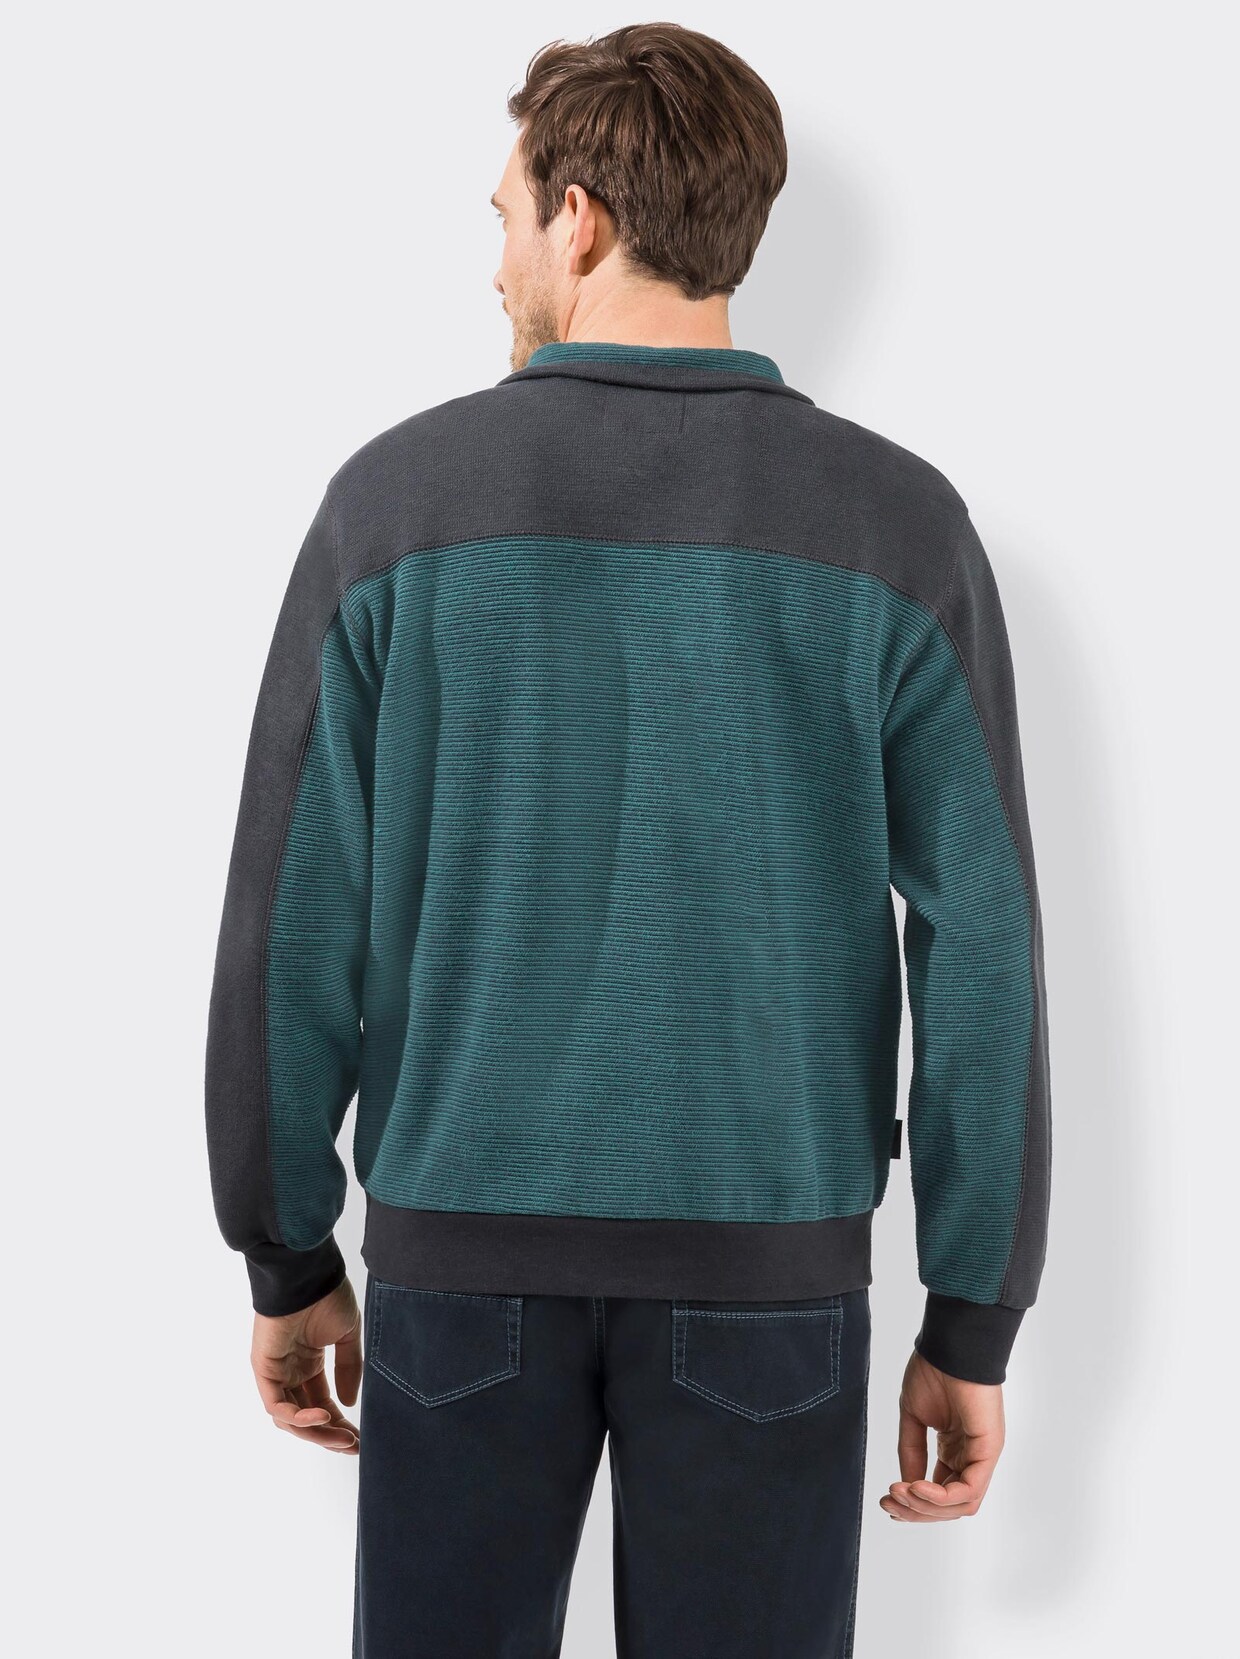 Marco Donati Sweatshirt - blau-grün